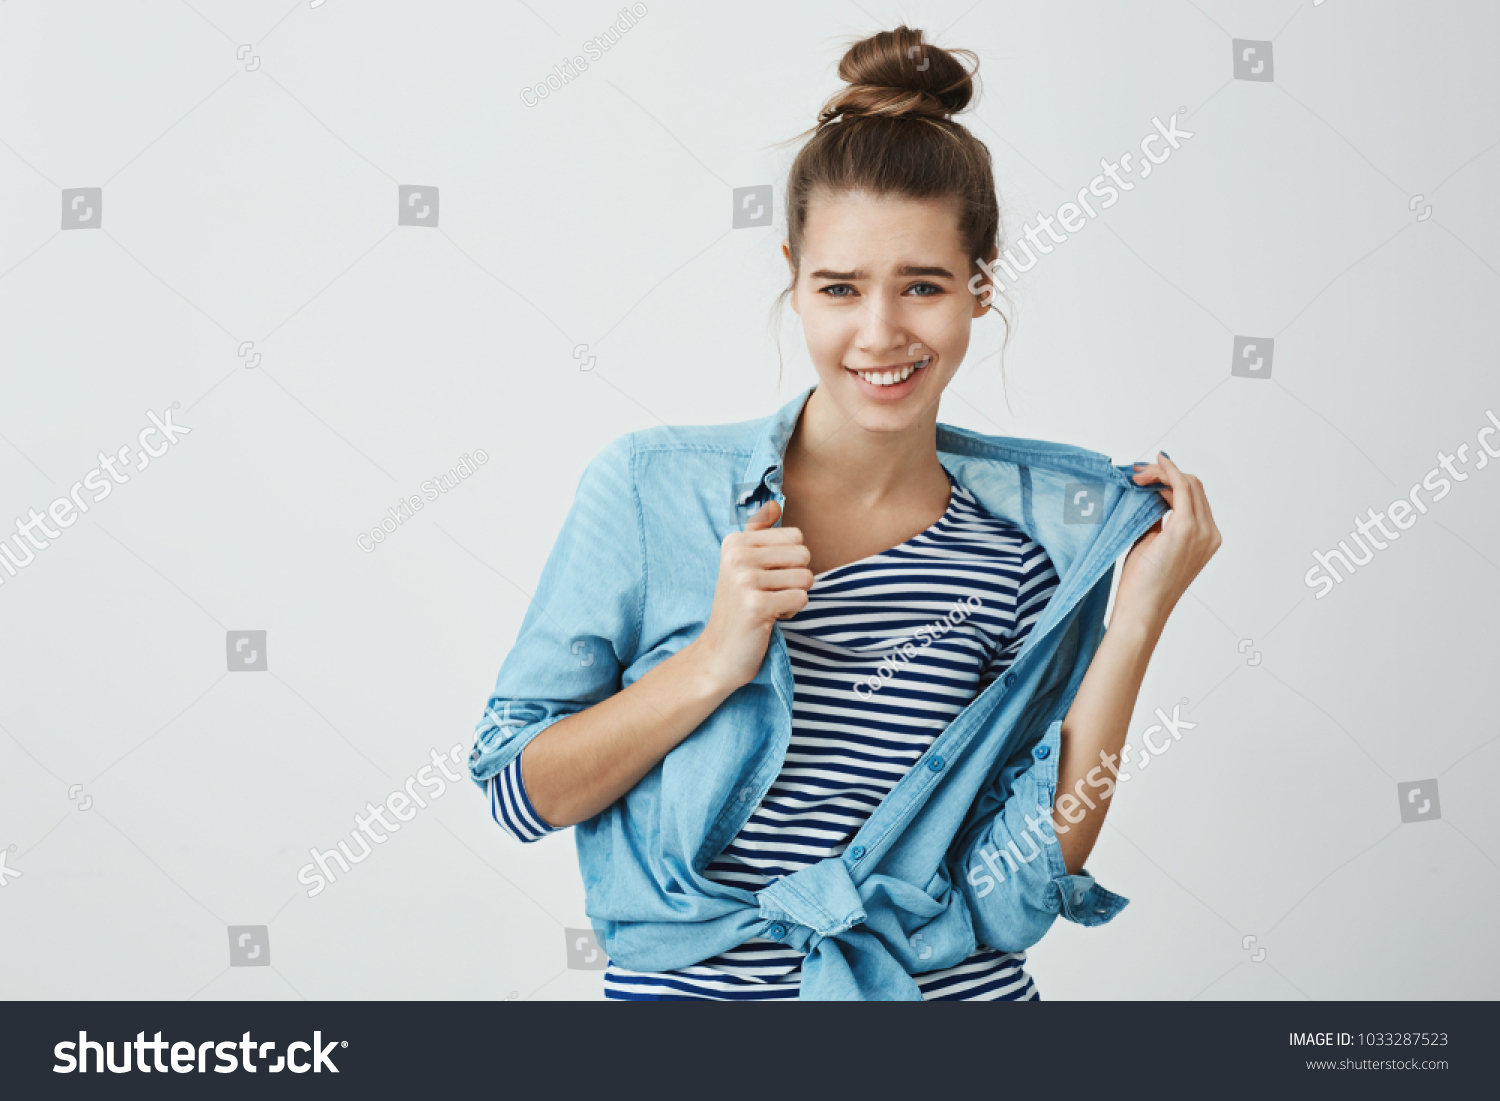 Woman Pulling Shirt Images Stock Photos Vectors Shutterstock